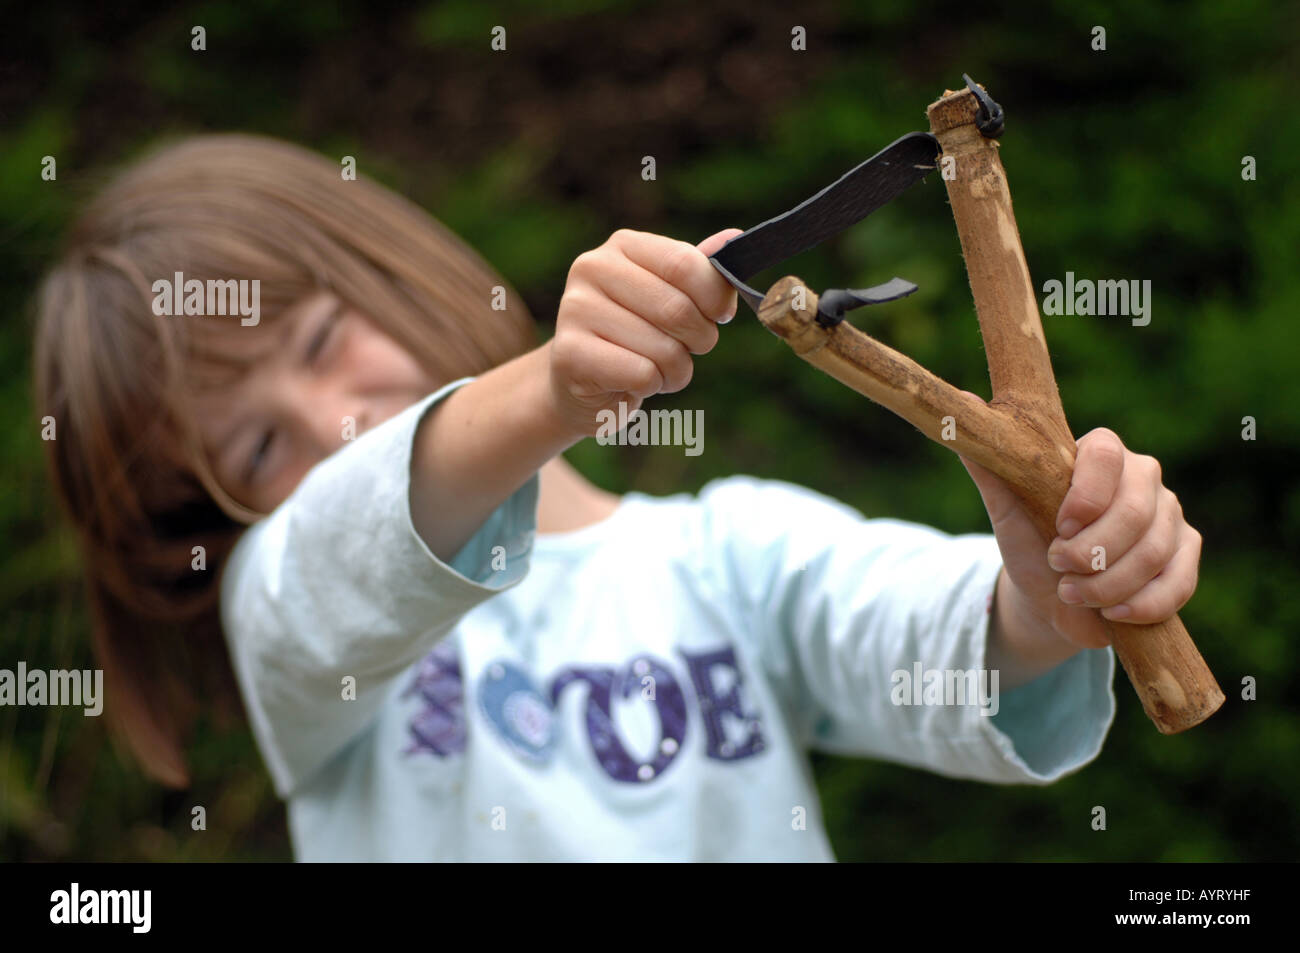 Girl using a catapult or slingshot Stock Photo